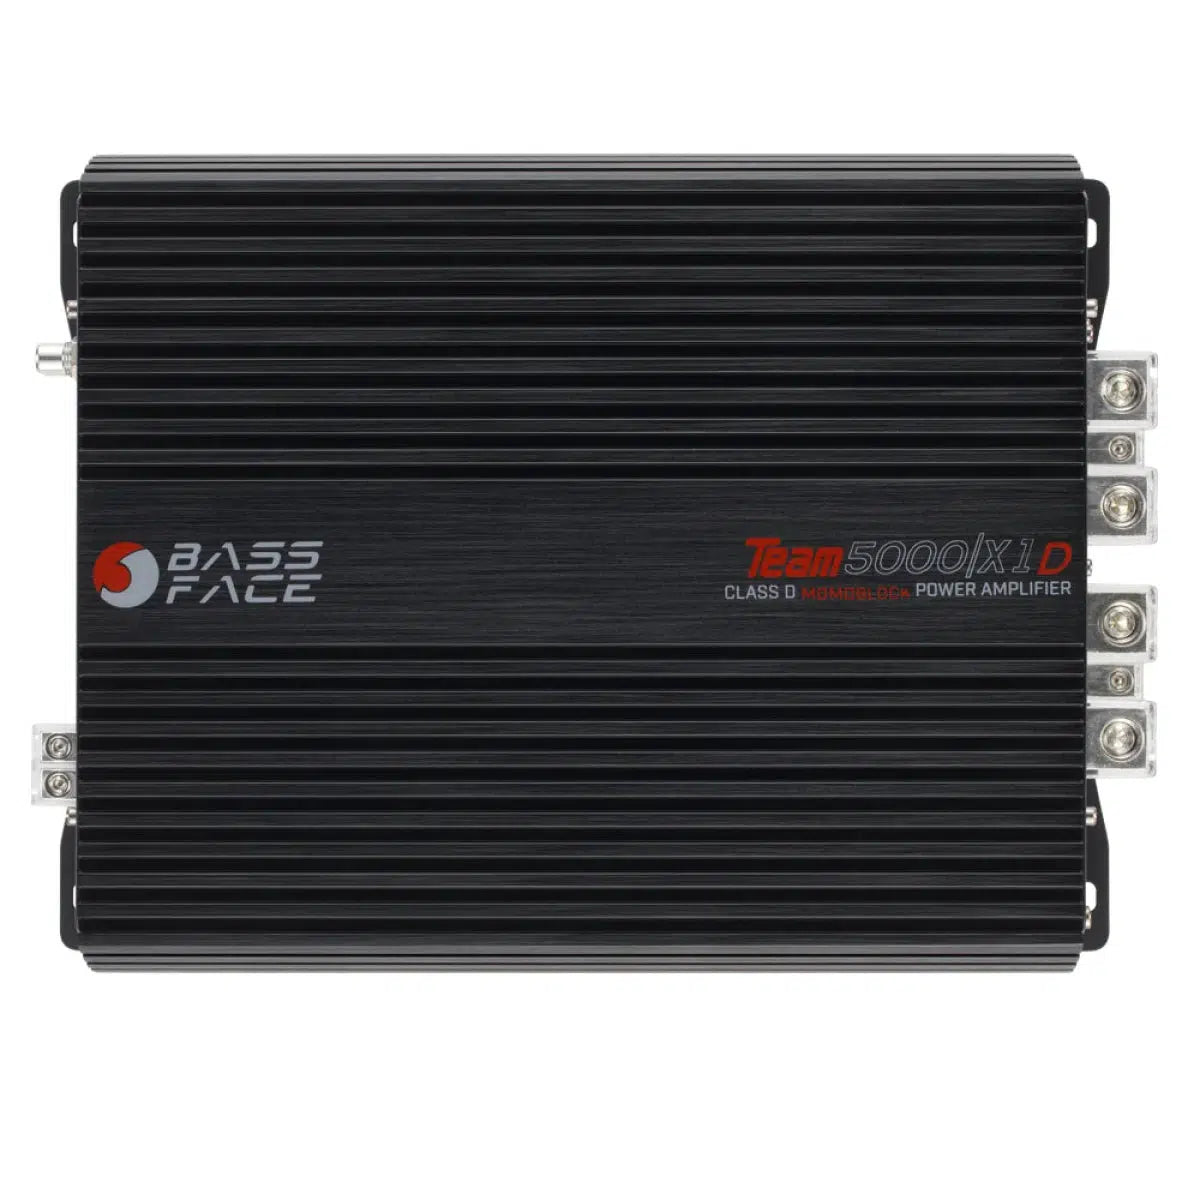 Bassface-Team 5000/x1D-1-Channel Amplifier-Masori.de